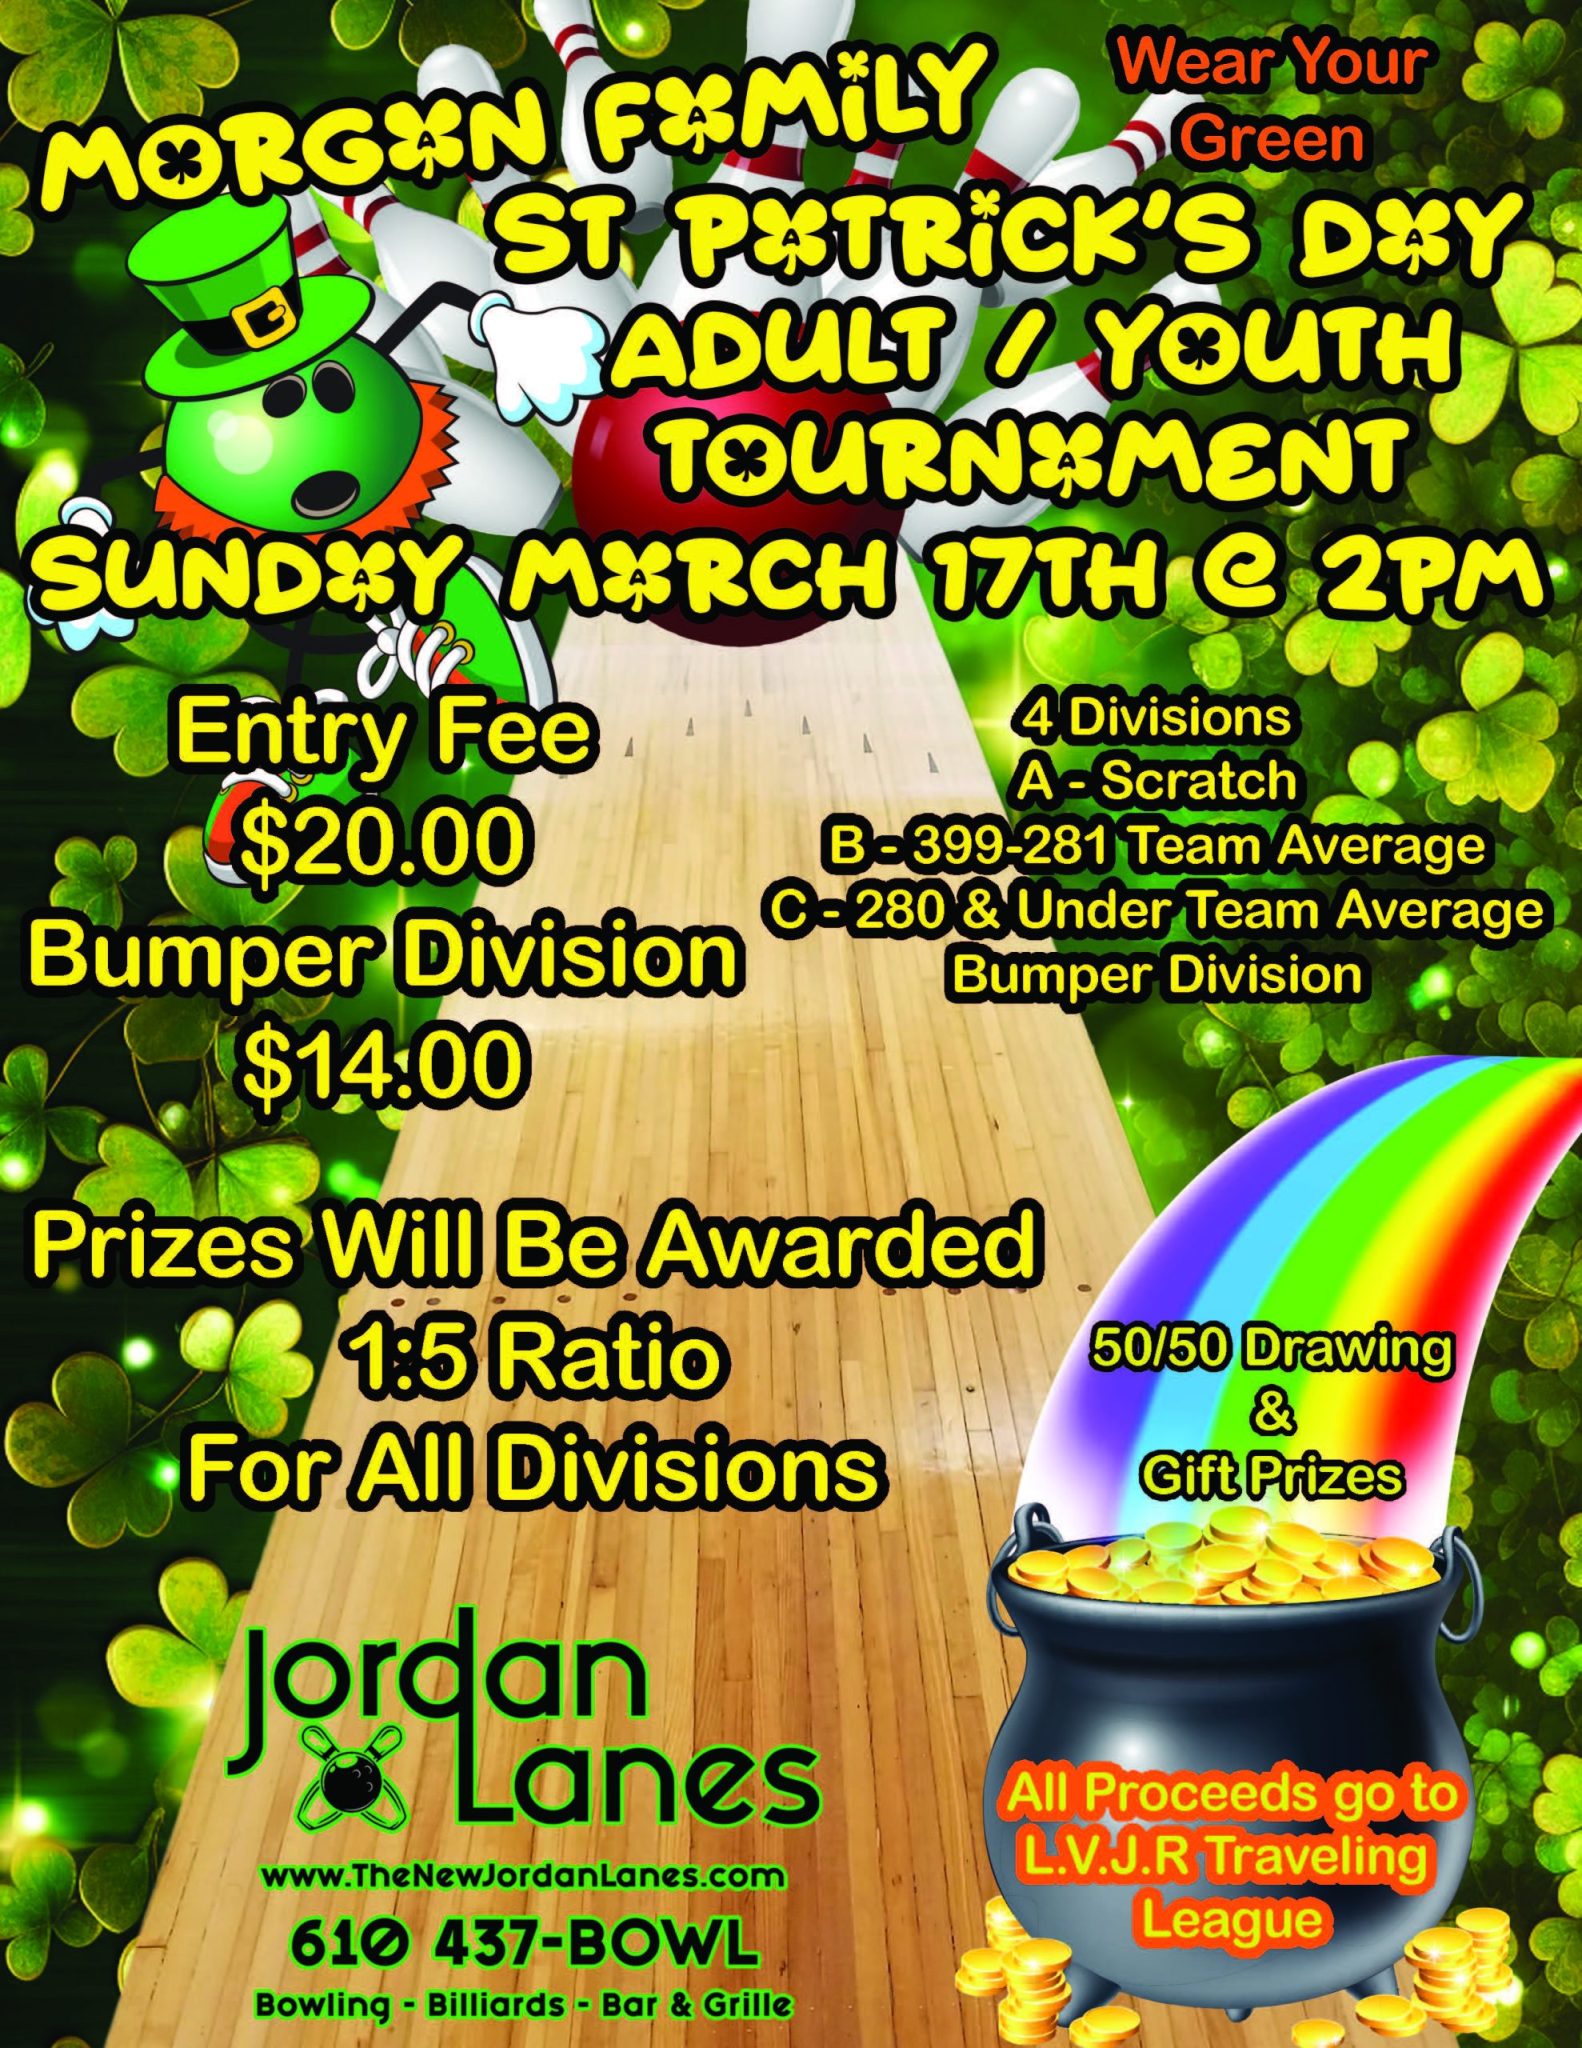 Morgan Family Adult / Youth Tournament @ The New Jordan Lanes